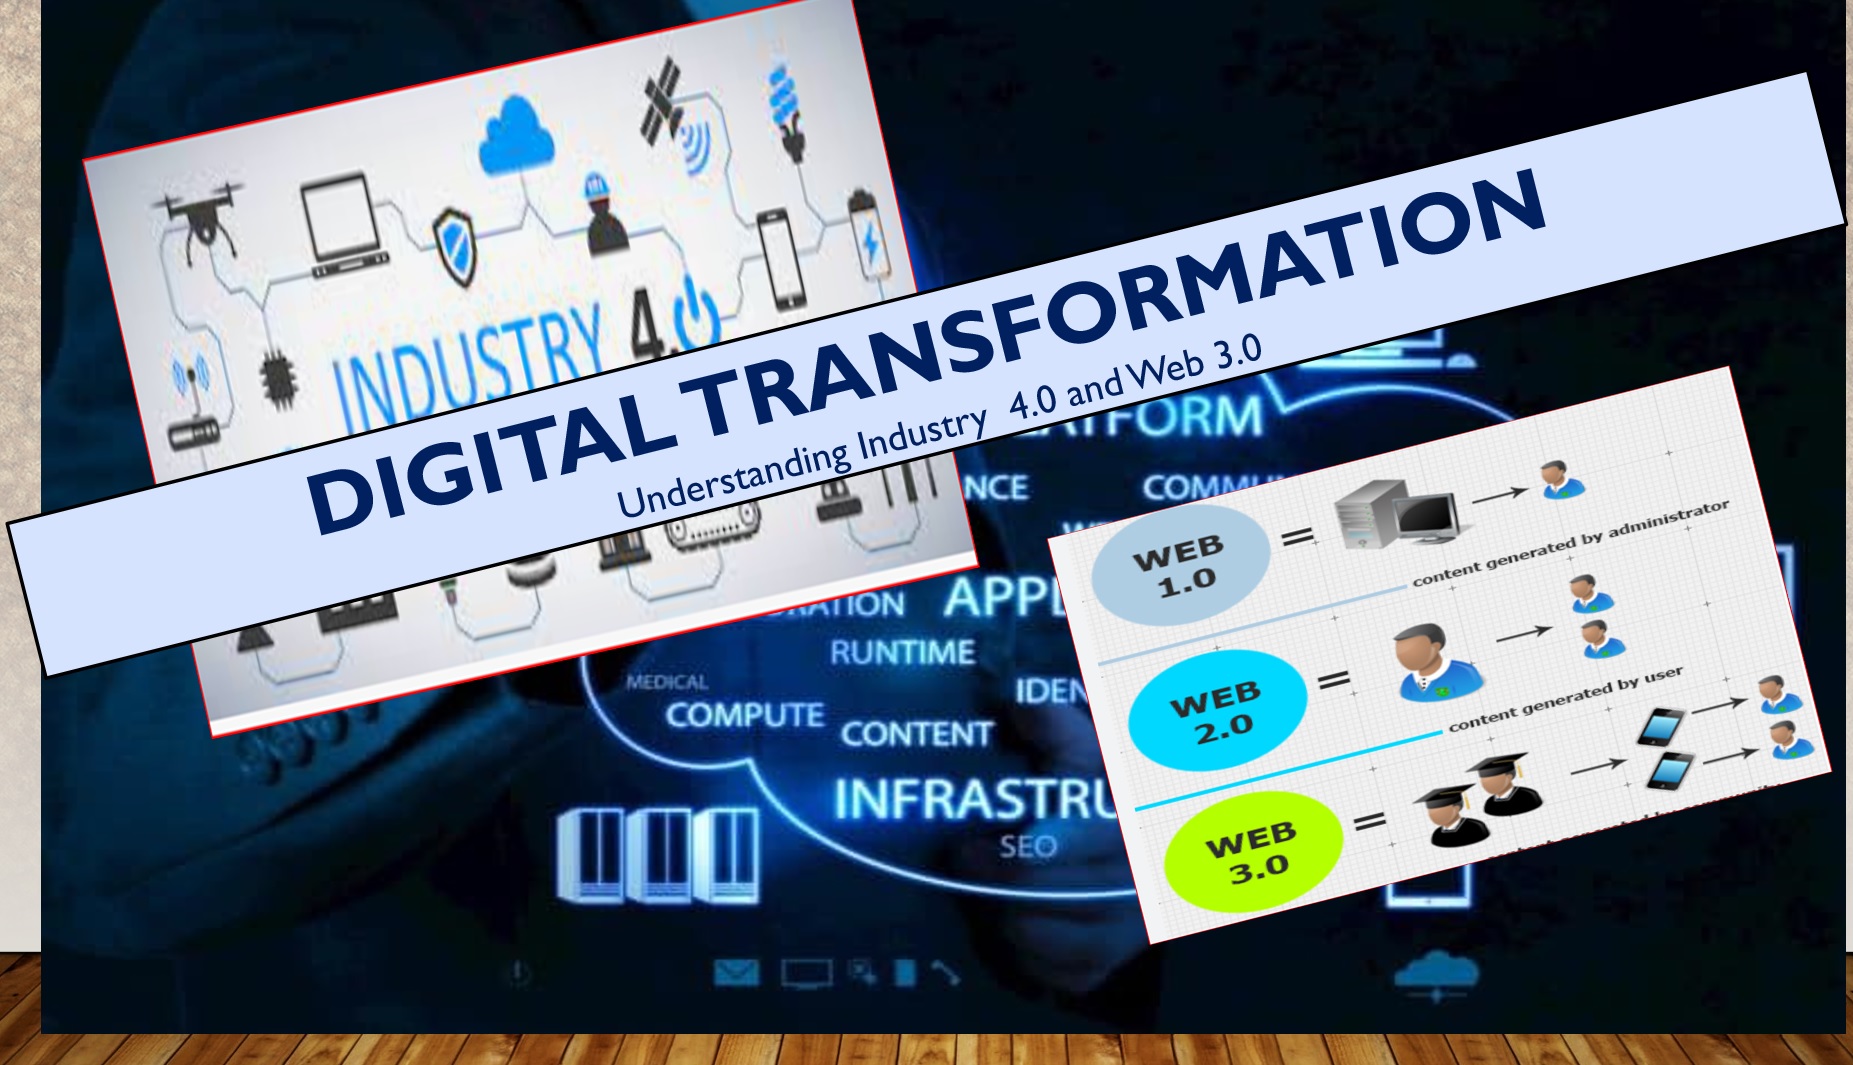 Digital Transformation - Understanding Industry 4.0 and web 3.0.